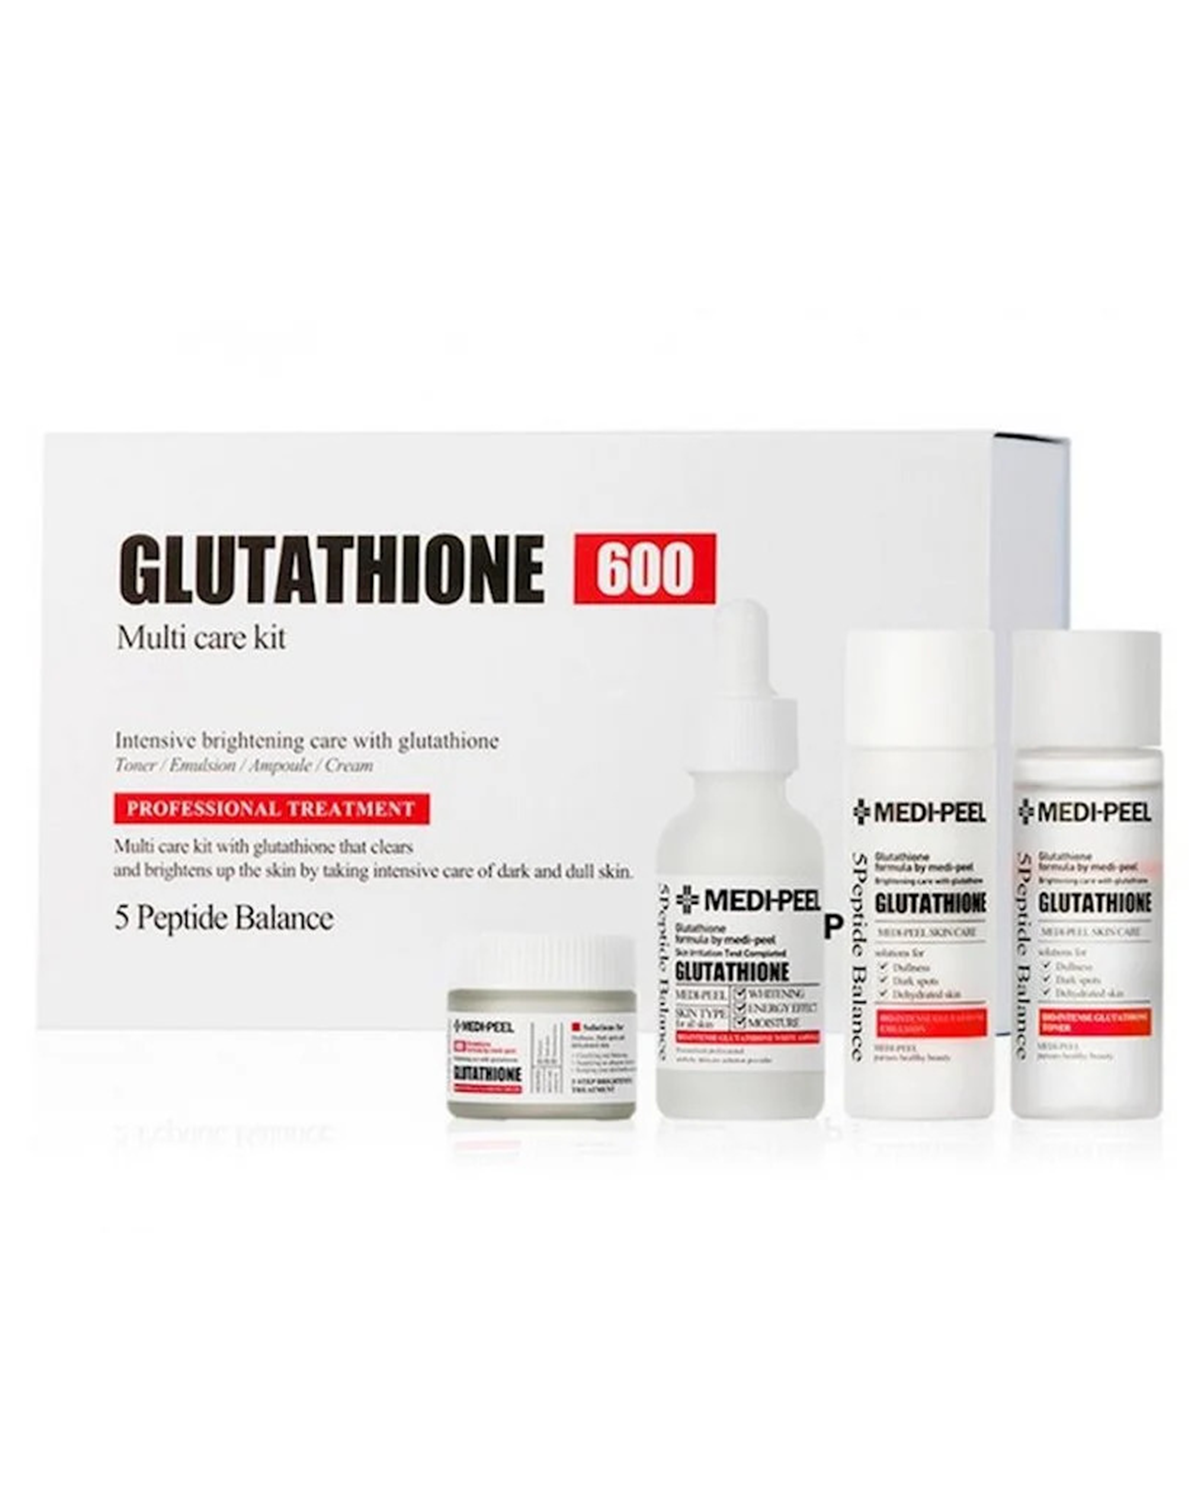 MEDI-PEEL Bio-Intense Glutathione 600 Multy Care Kit